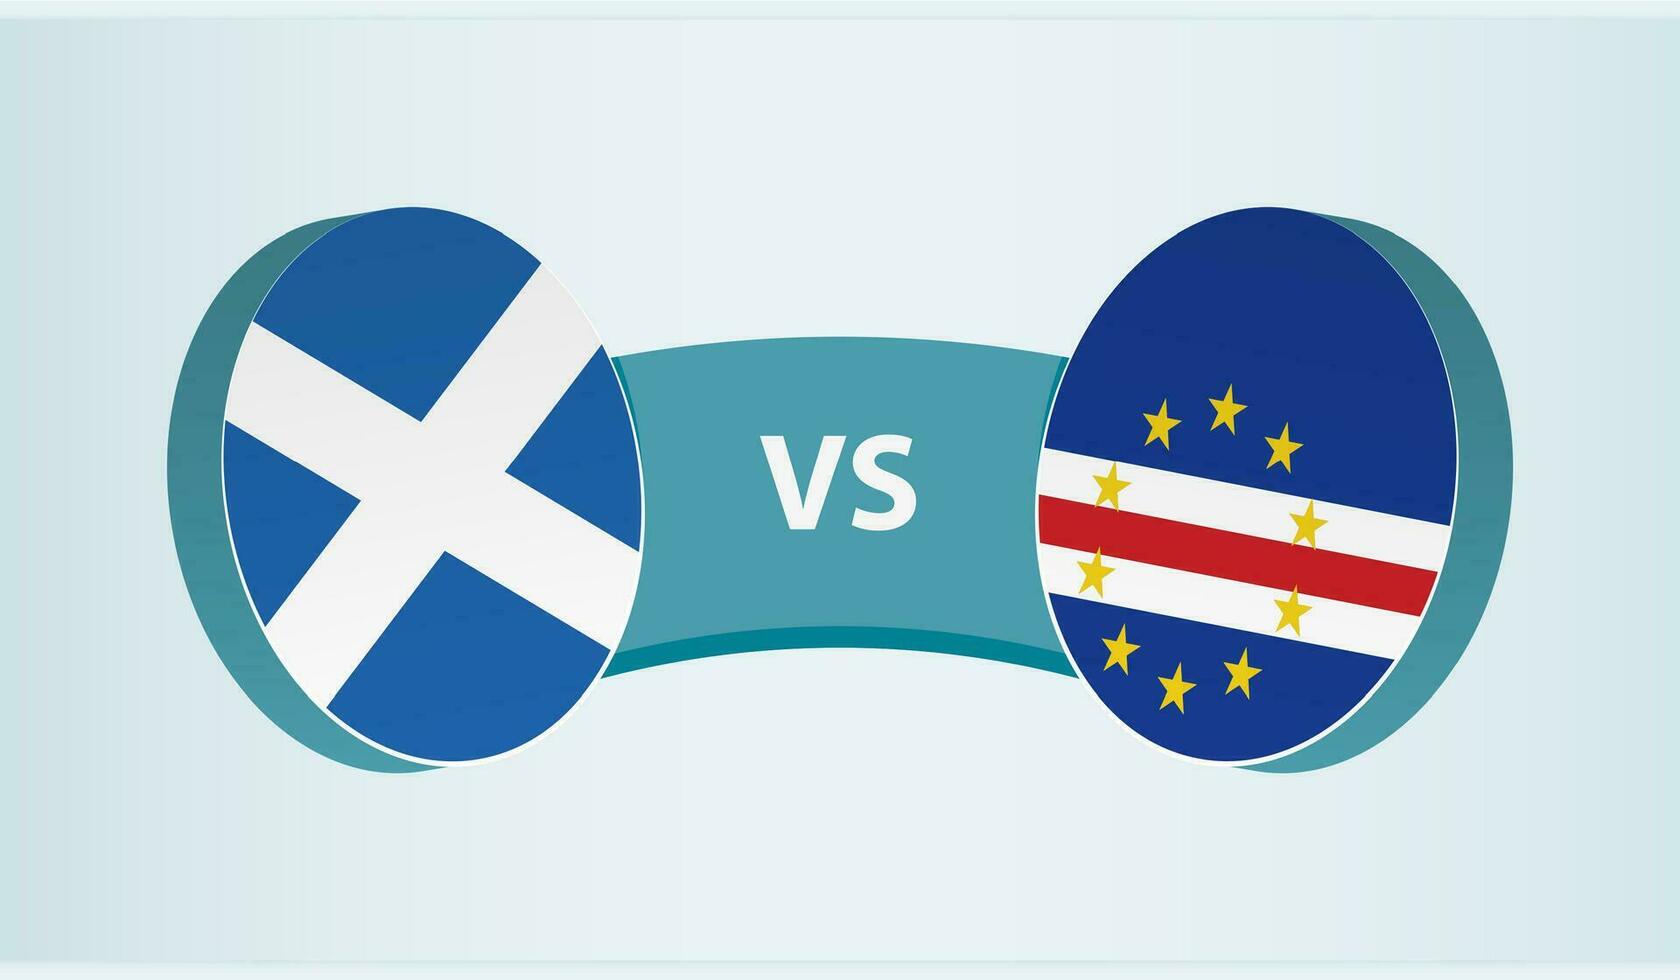 Scotland versus Cape Verde, team sports competition concept. vector